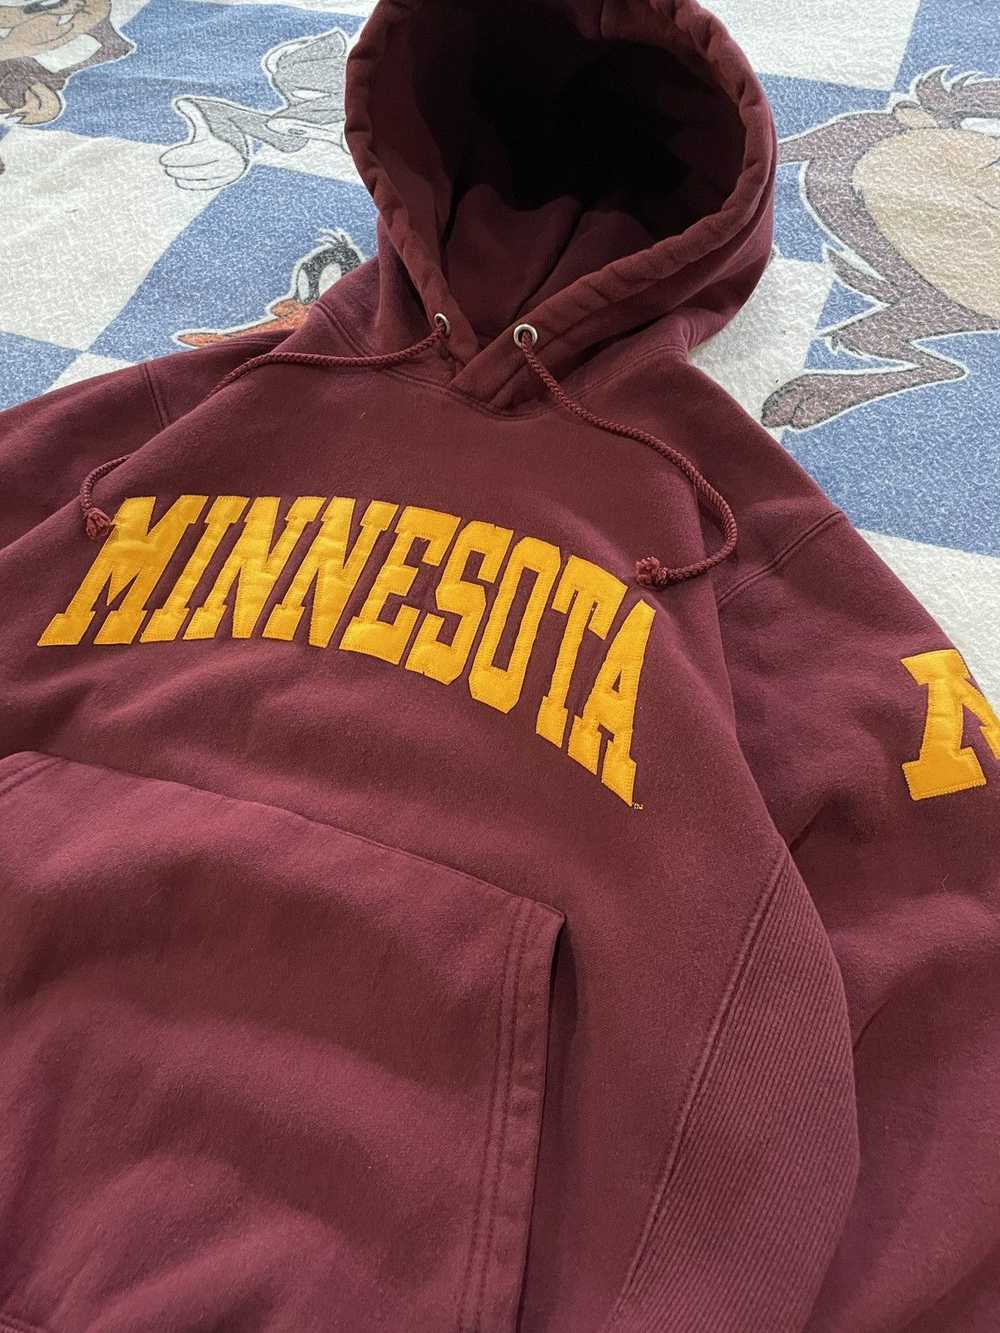 American College Minnesota gophers sweatshirt - image 2